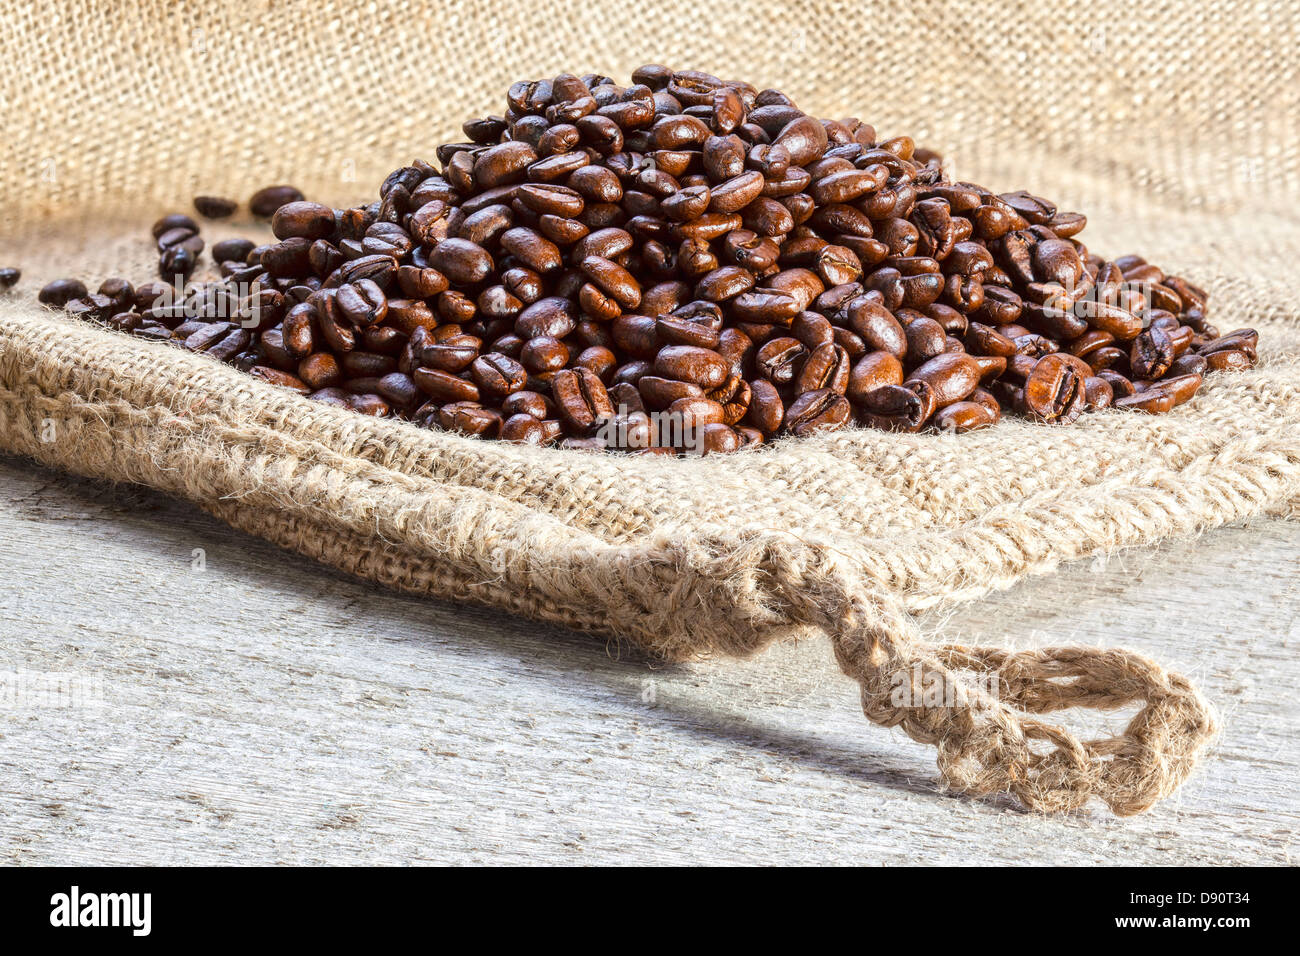 Los granos de café en sacos de arpillera - montones de café tostado en grano en un saco de yute o arpillera. Foto de stock